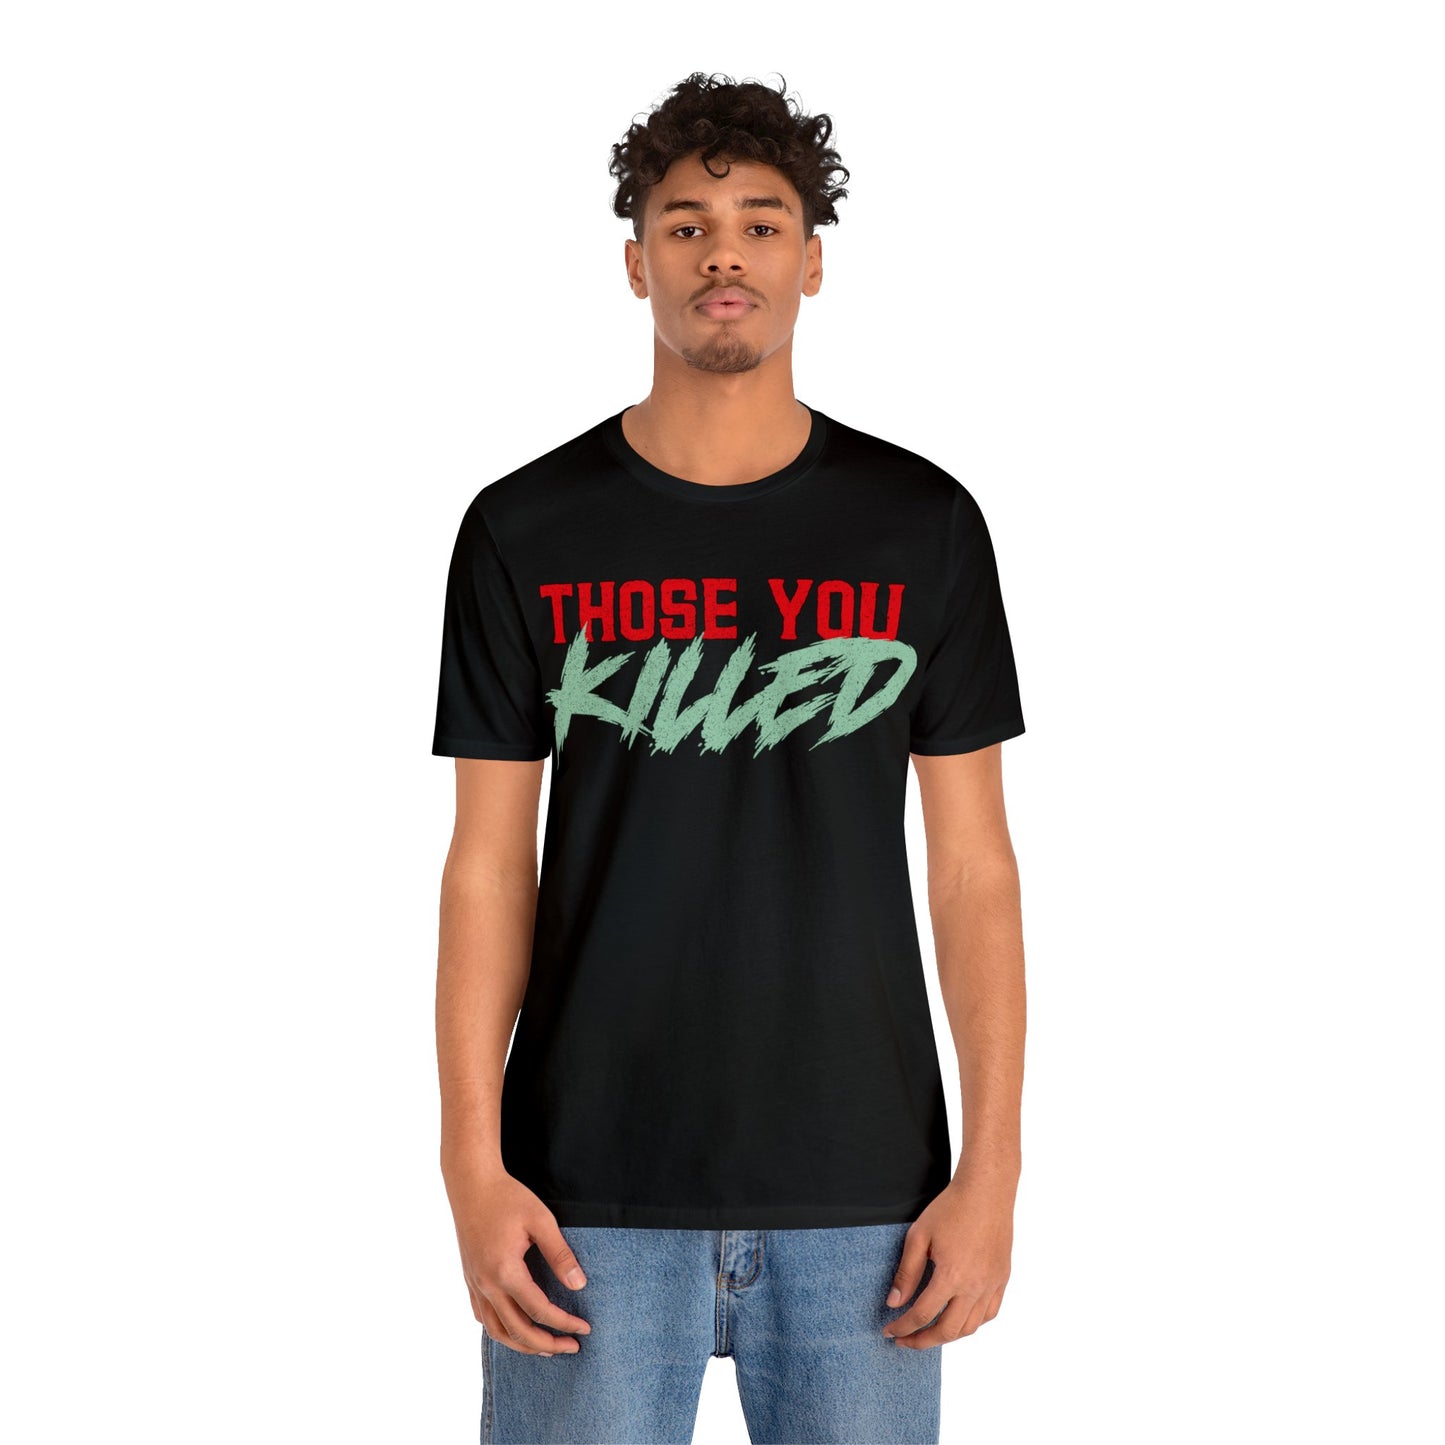 Those You Killed T-Shirt